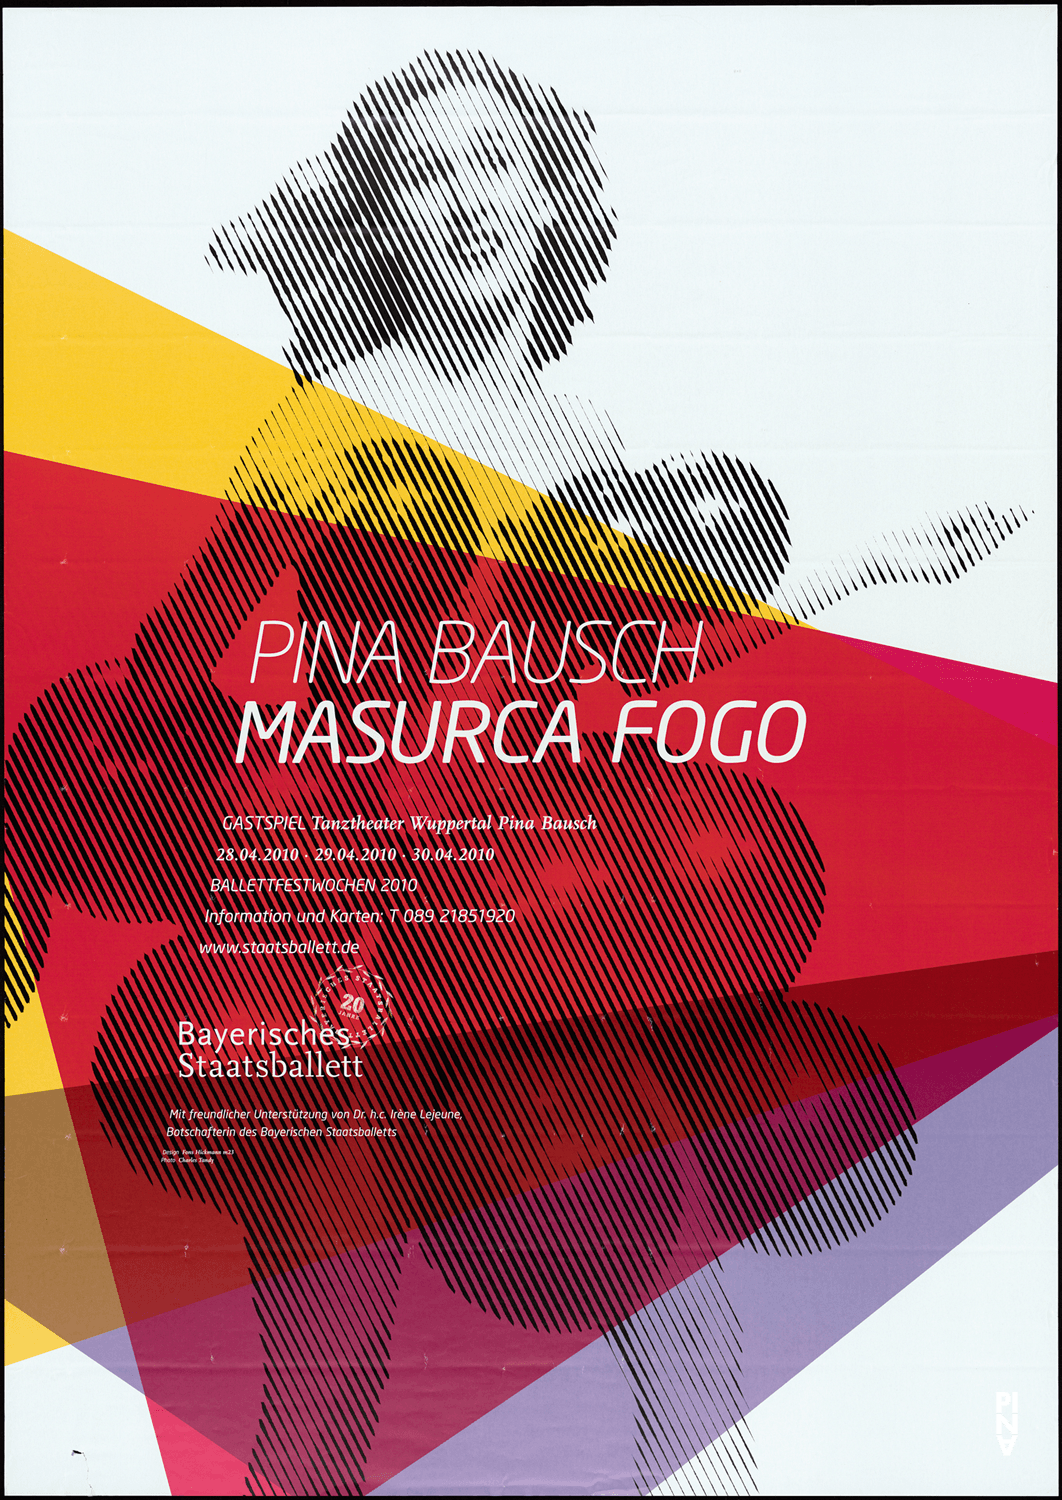 Poster for “Masurca Fogo” by Pina Bausch in Munich, 04/28/2010 – 04/30/2010